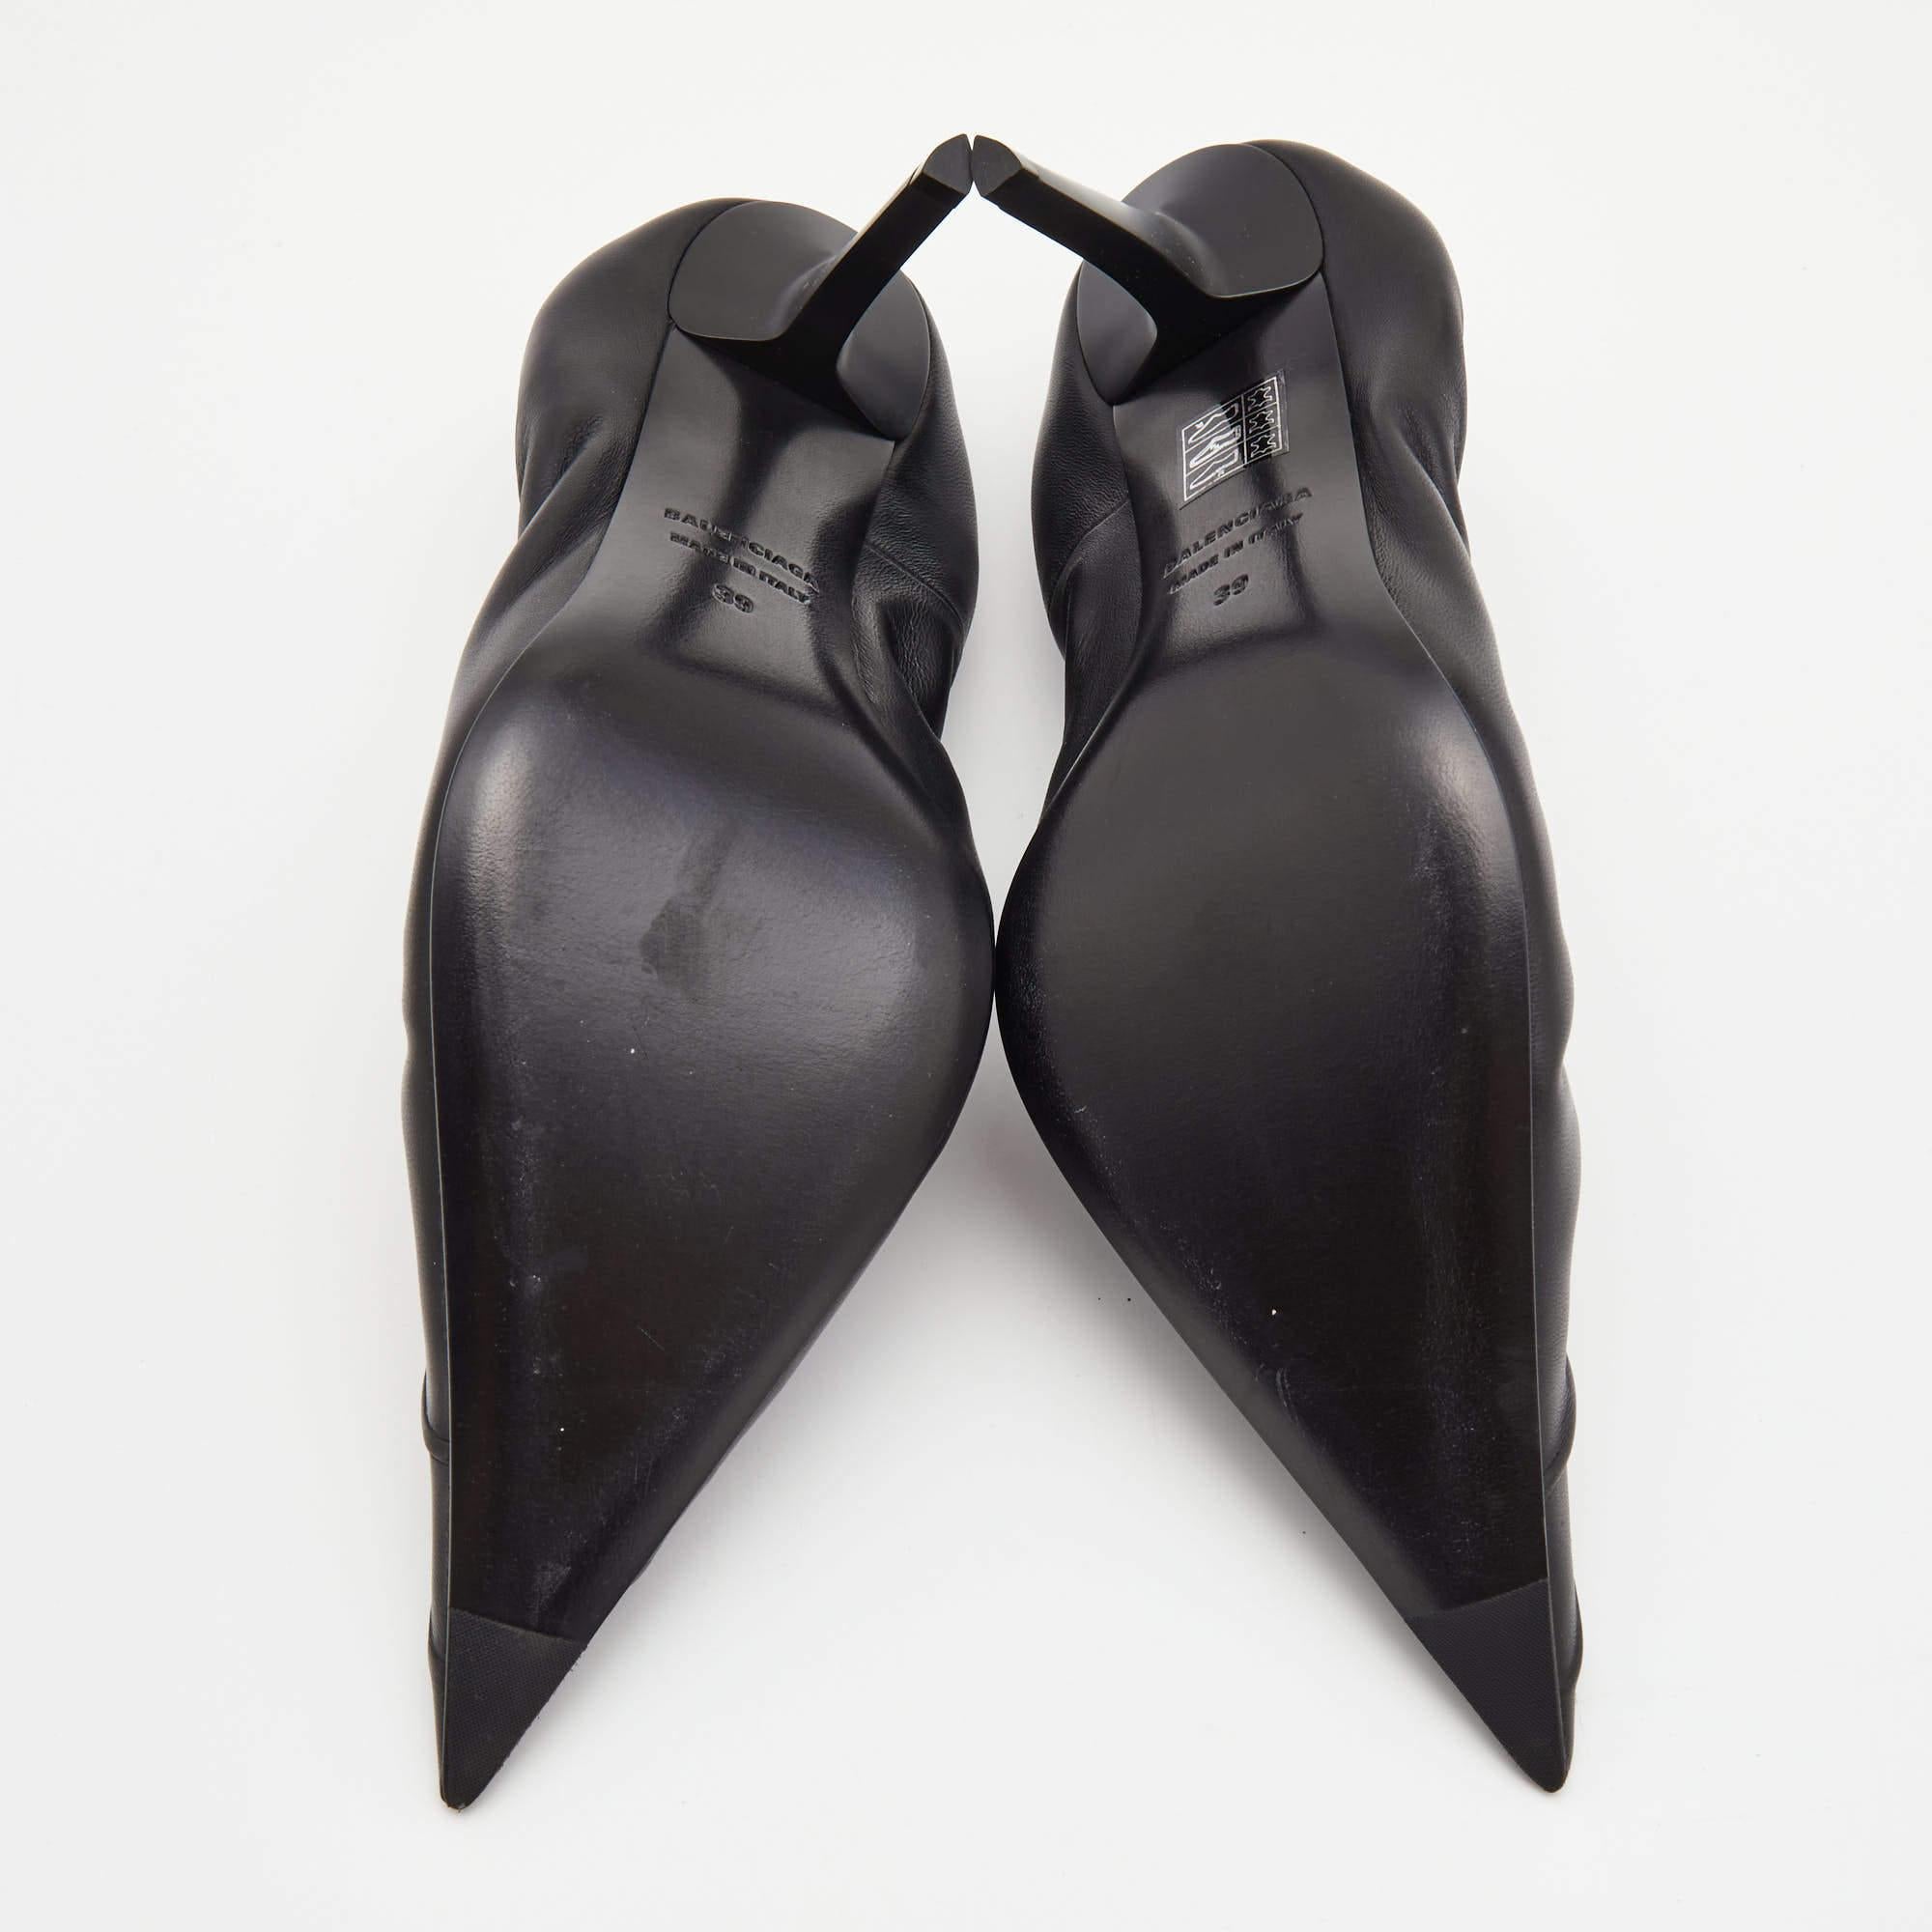 Balenciaga Black Leather Knife Pumps Size 39 4